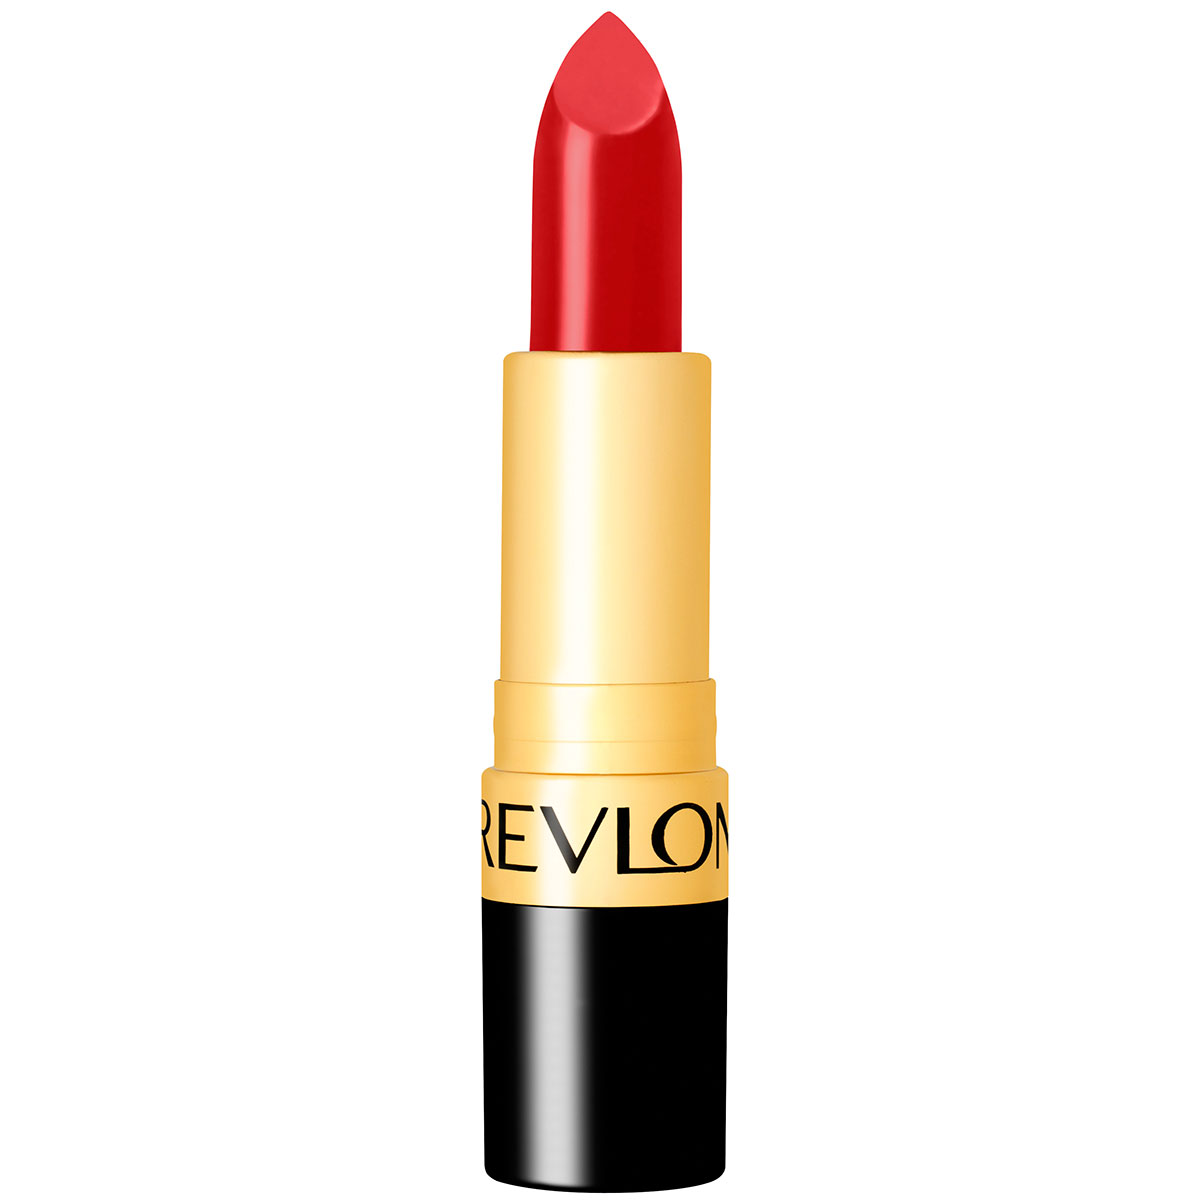 Revlon Super Lustrous Lipstick 4.2 g Revlon Läppstift